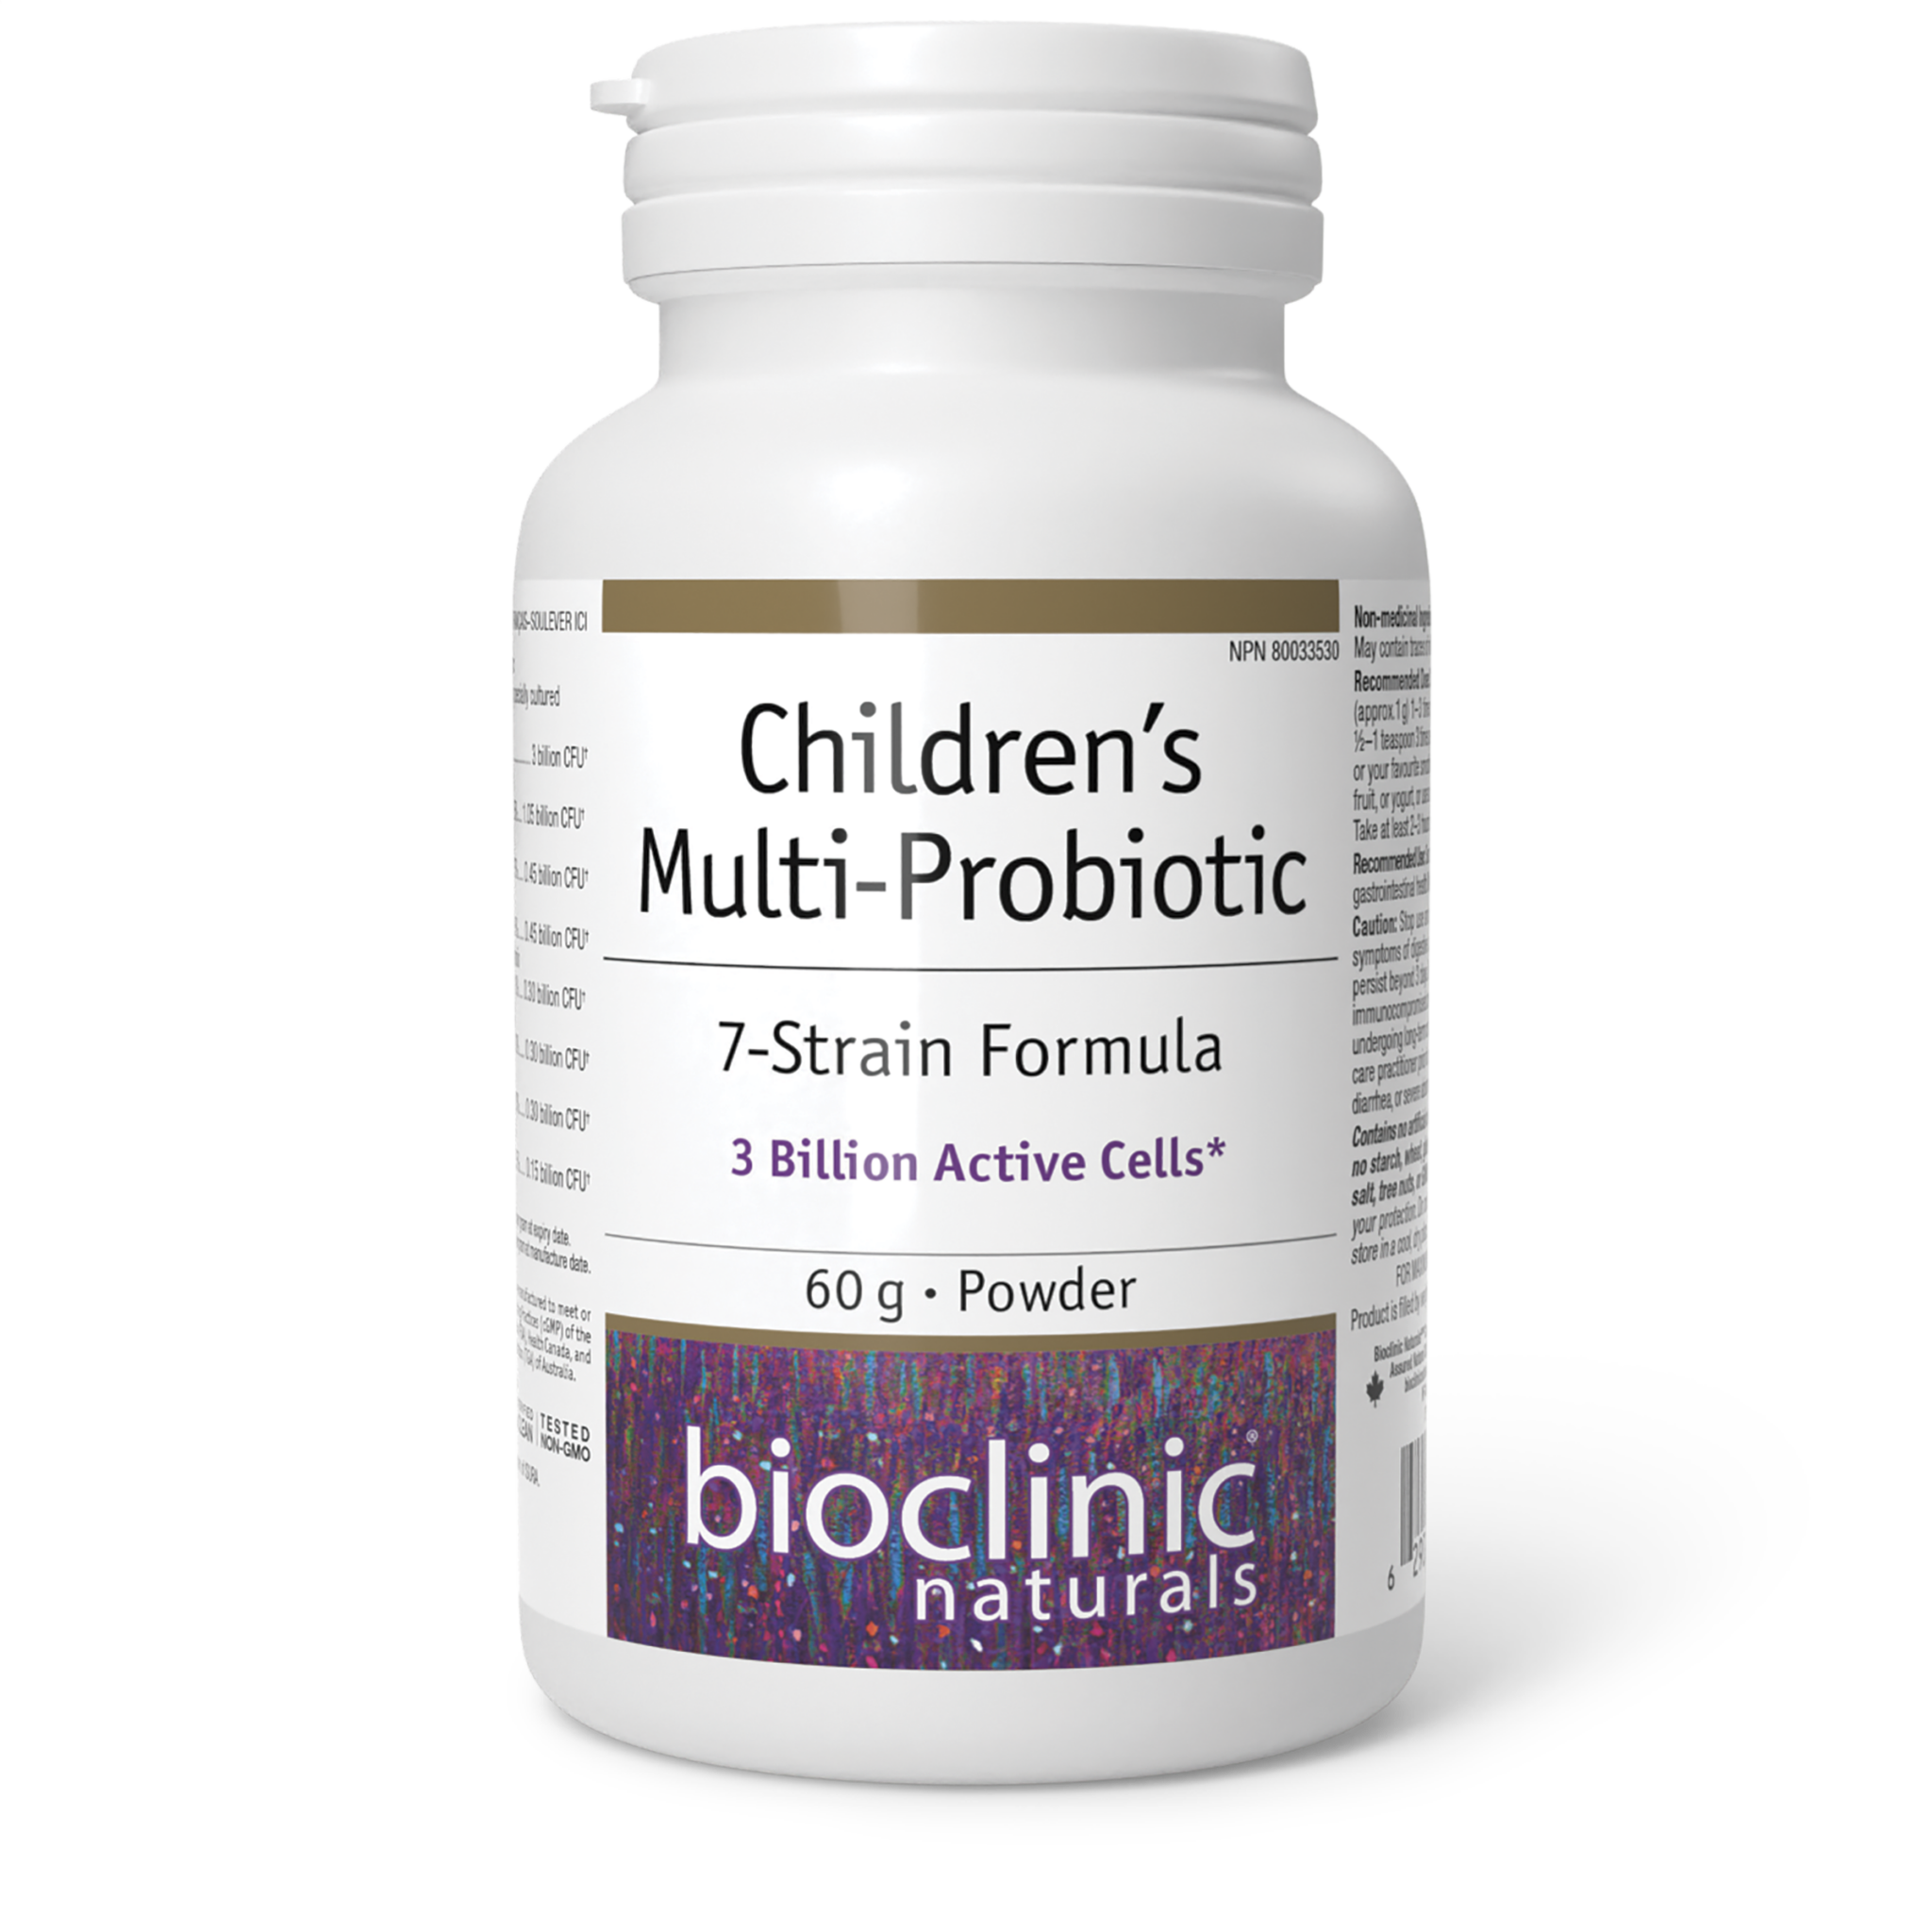 Children’s Multi-Probiotic 7-Strain Formula 3 Billion Active Cells 60 g